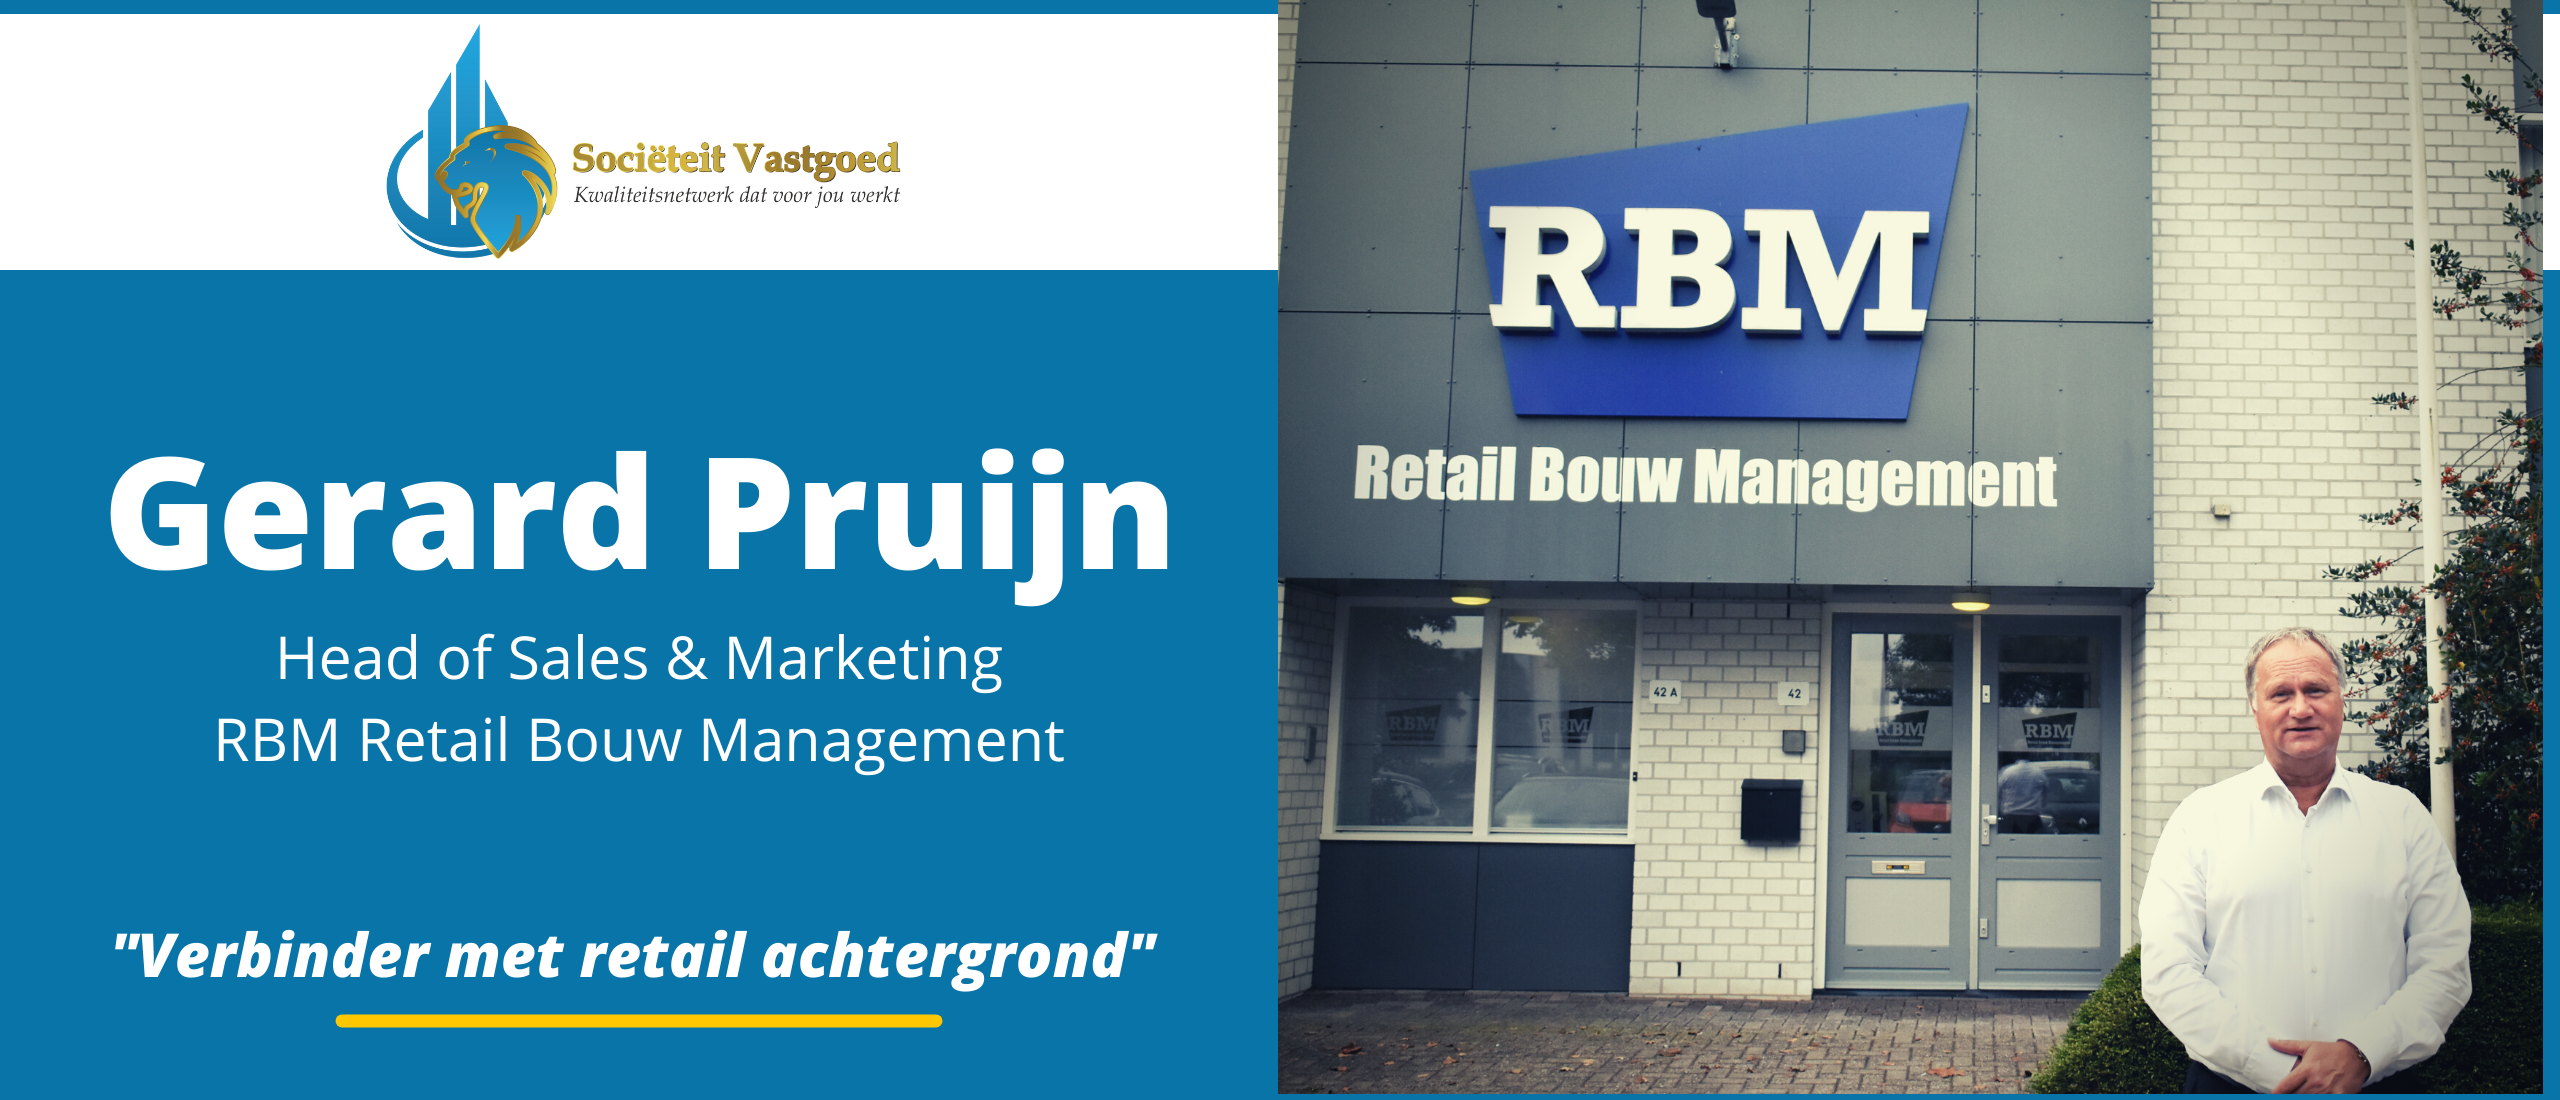 Gerard Pruijn, RBM Retail